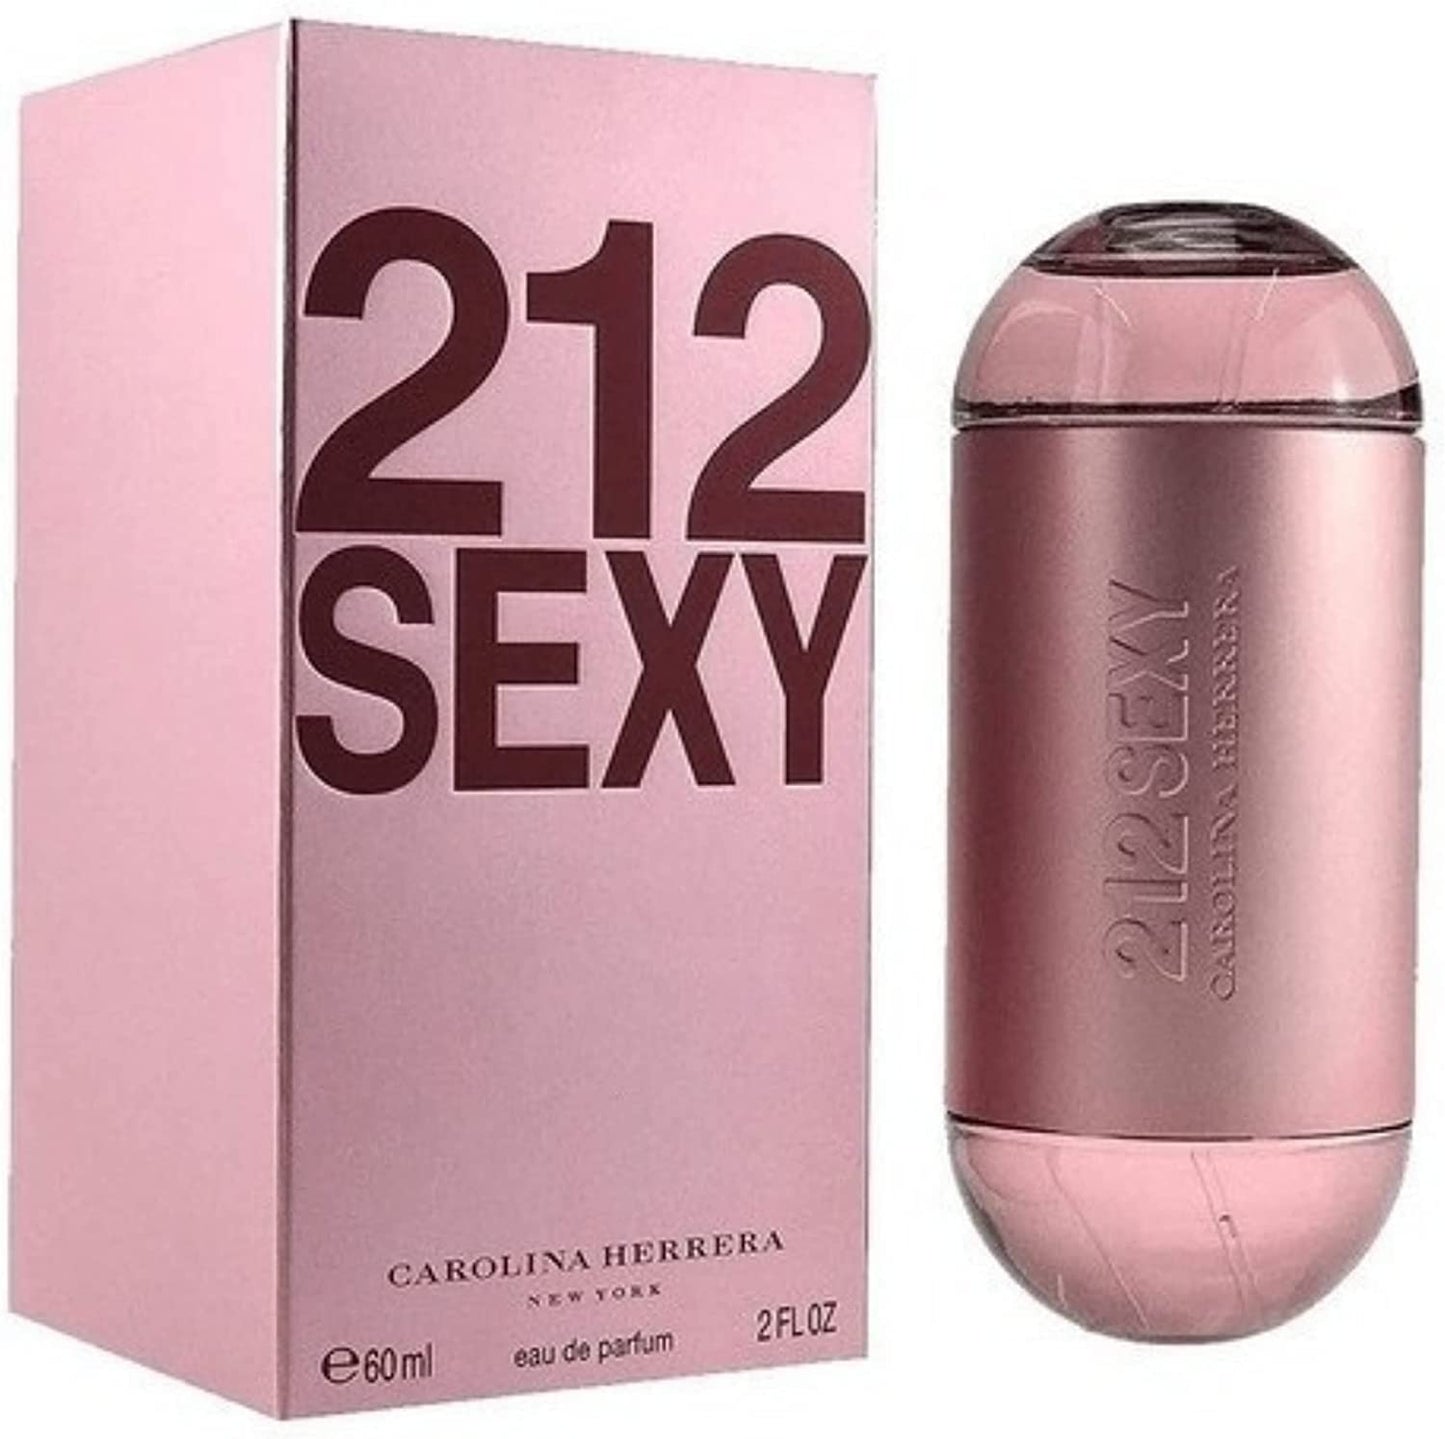 212 Sexy by Carolina Herrera Eau De Parfum for Woman